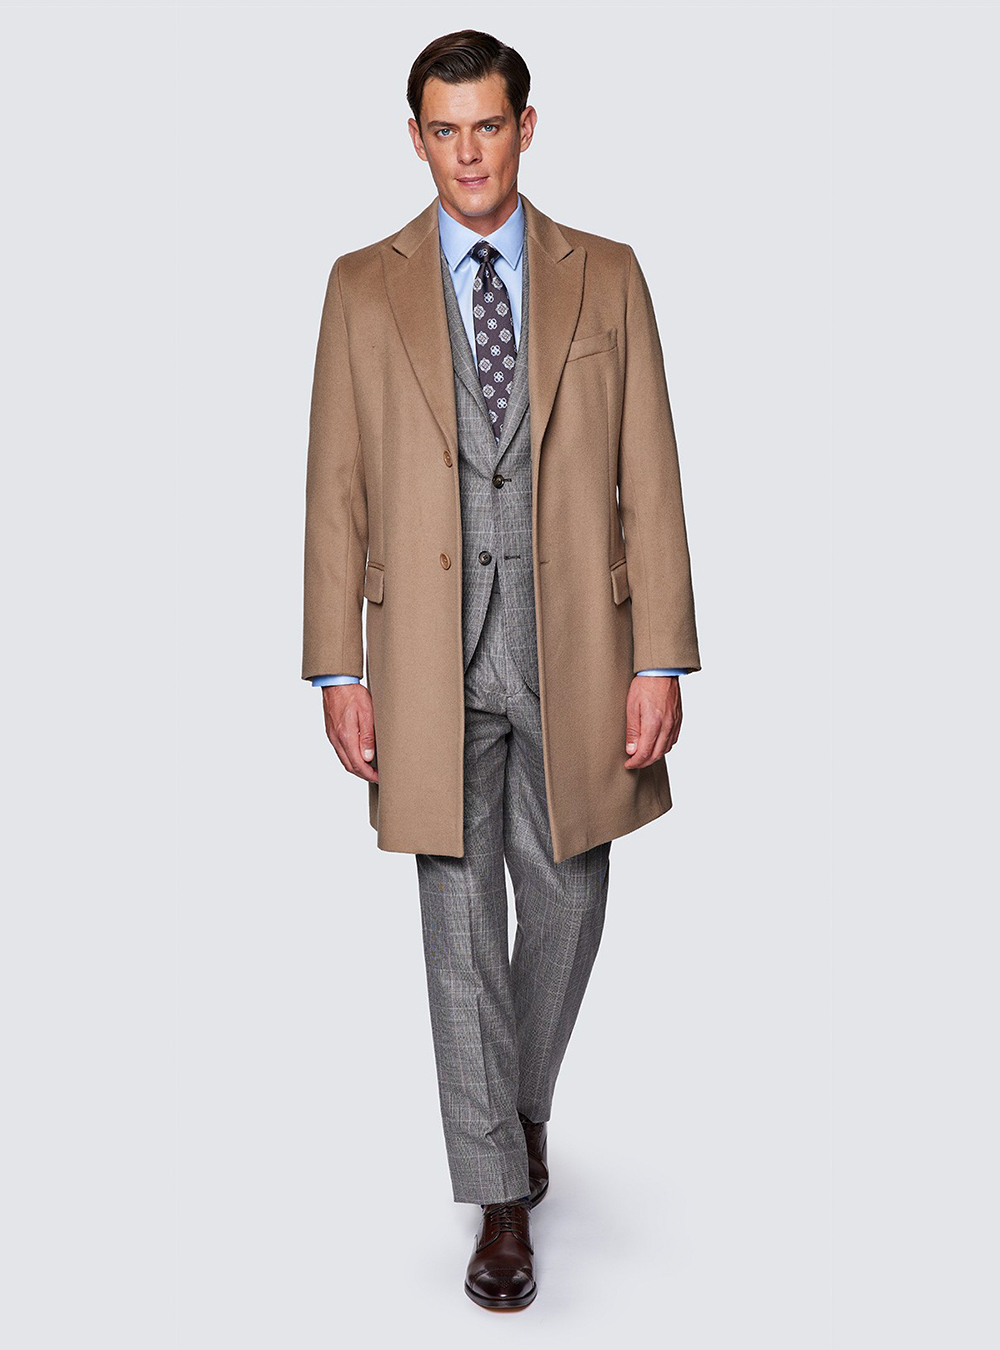 camel overcoat, grey suit, blue shirt, brown tie, and brown brogues